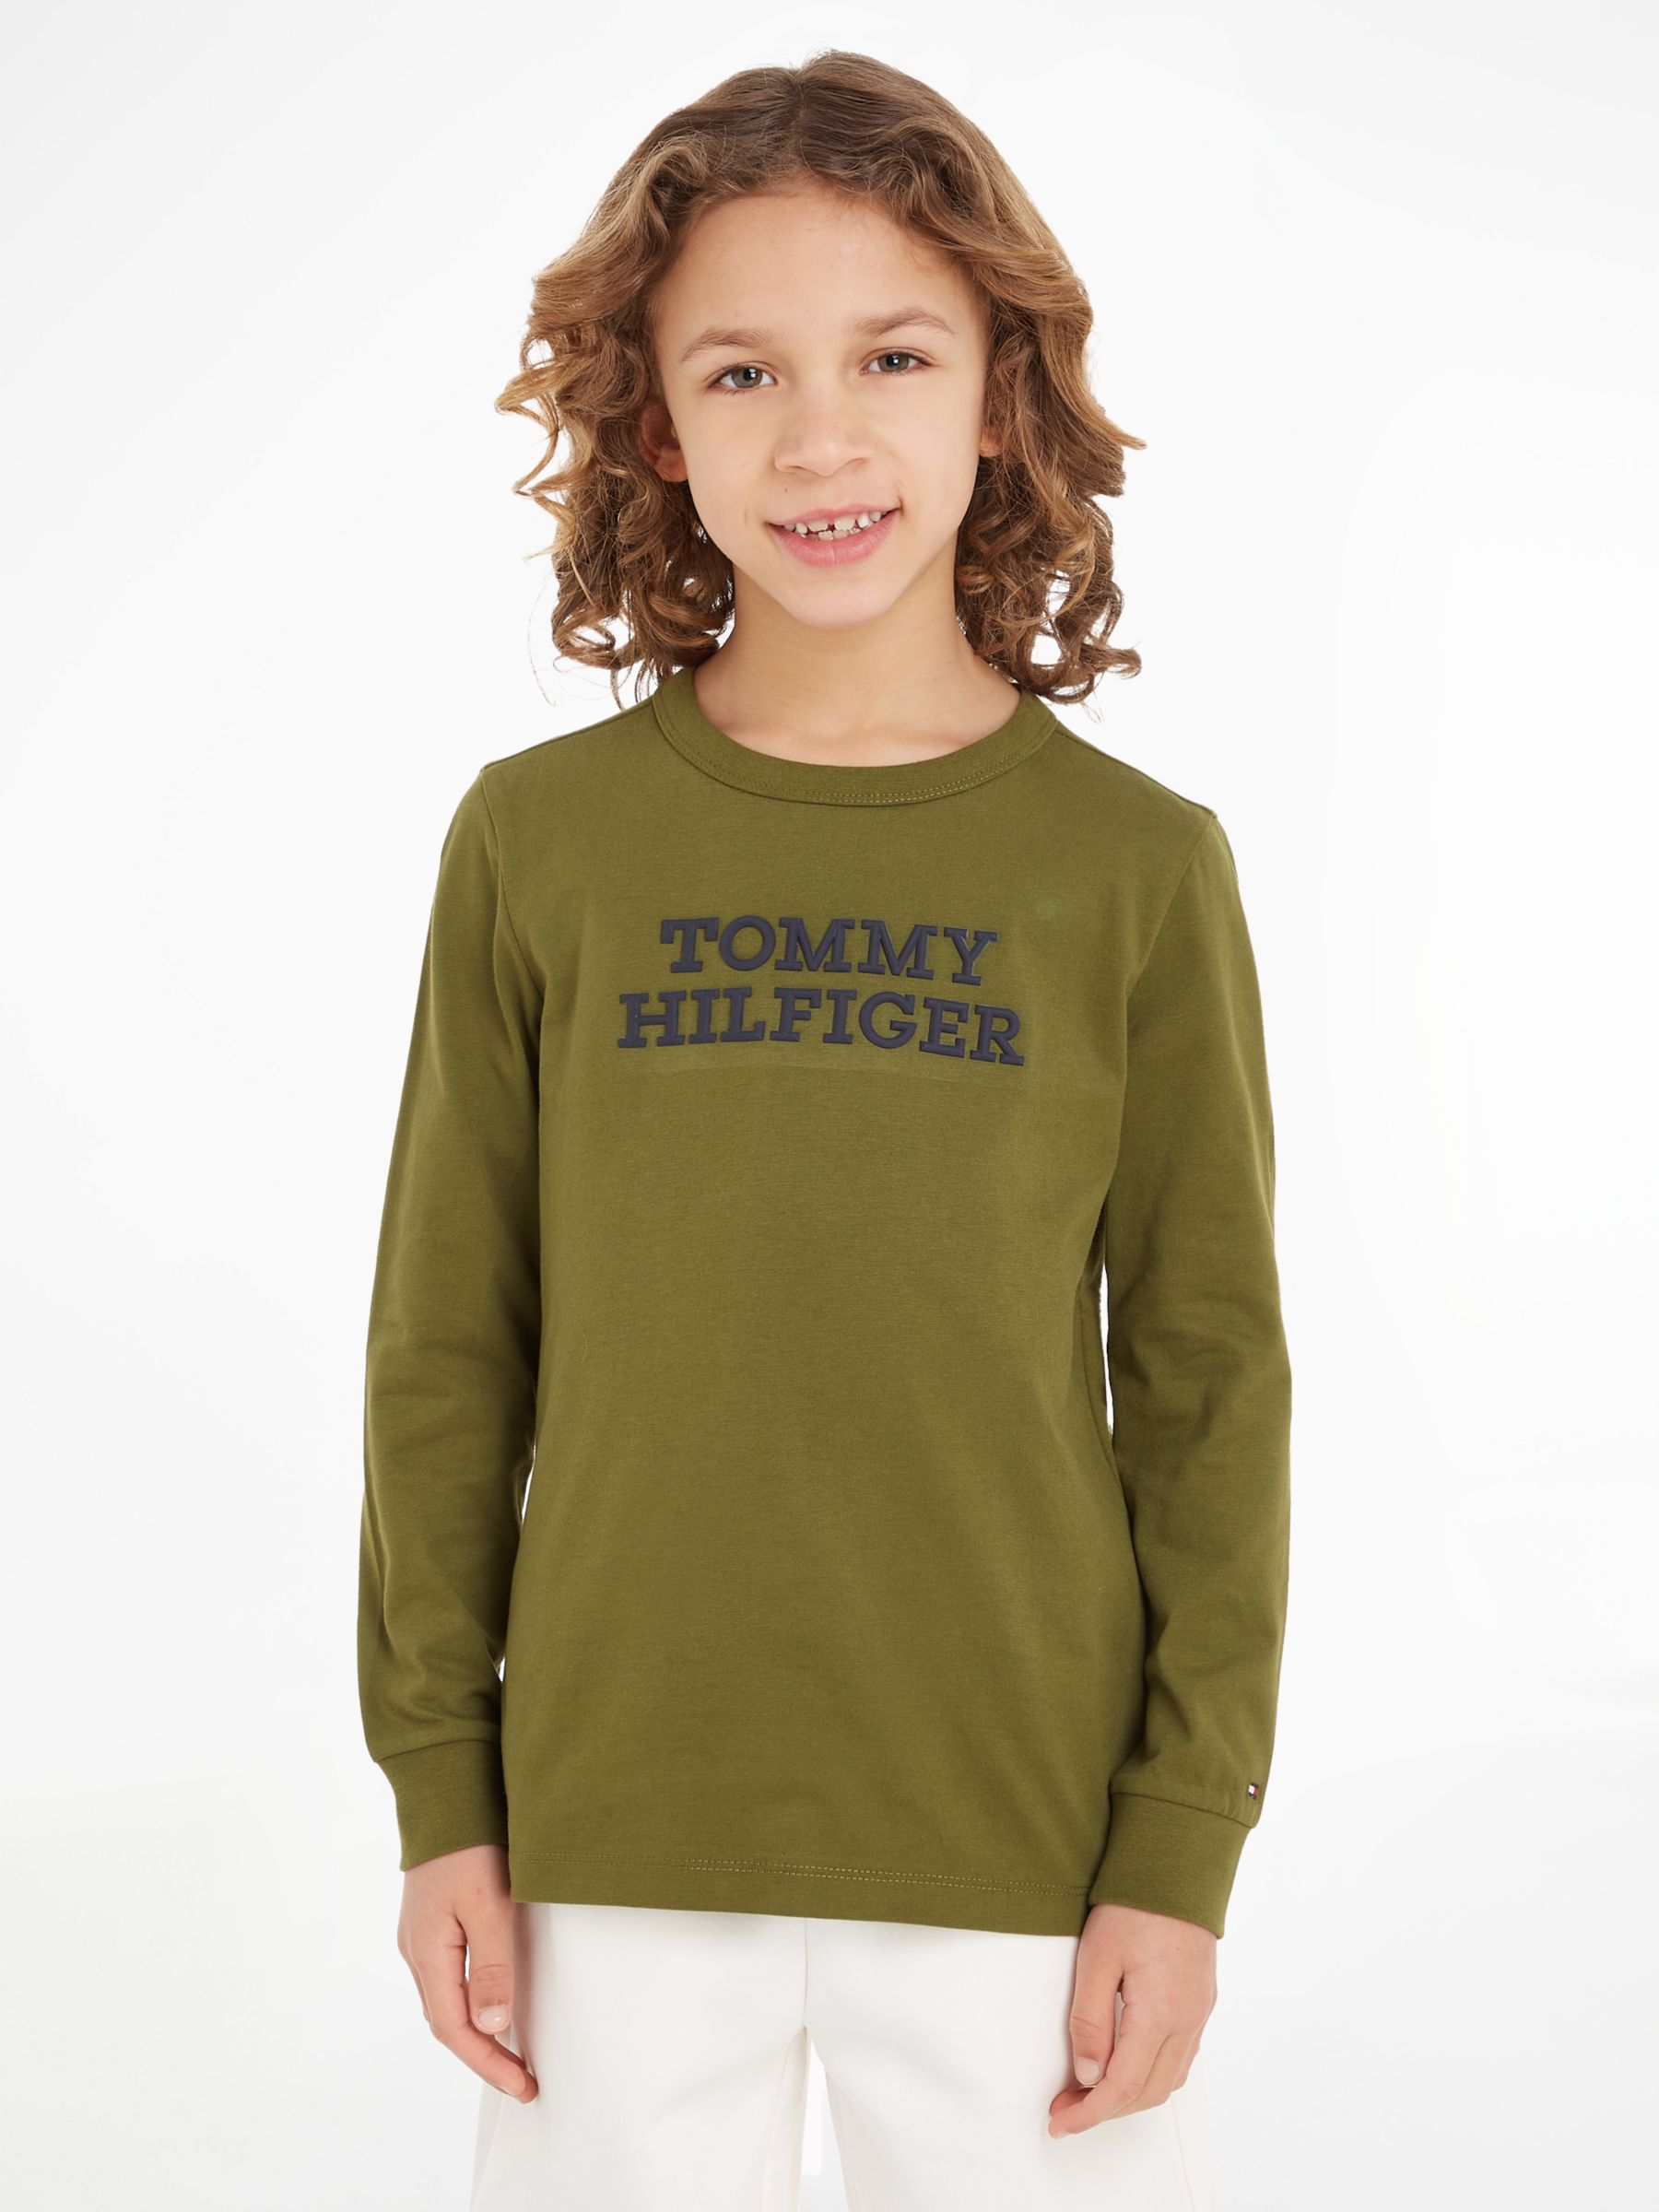 Tommy Hilfiger Kids\' Raised Logo Long Sleeve T-Shirt, Putting Green, 3 years